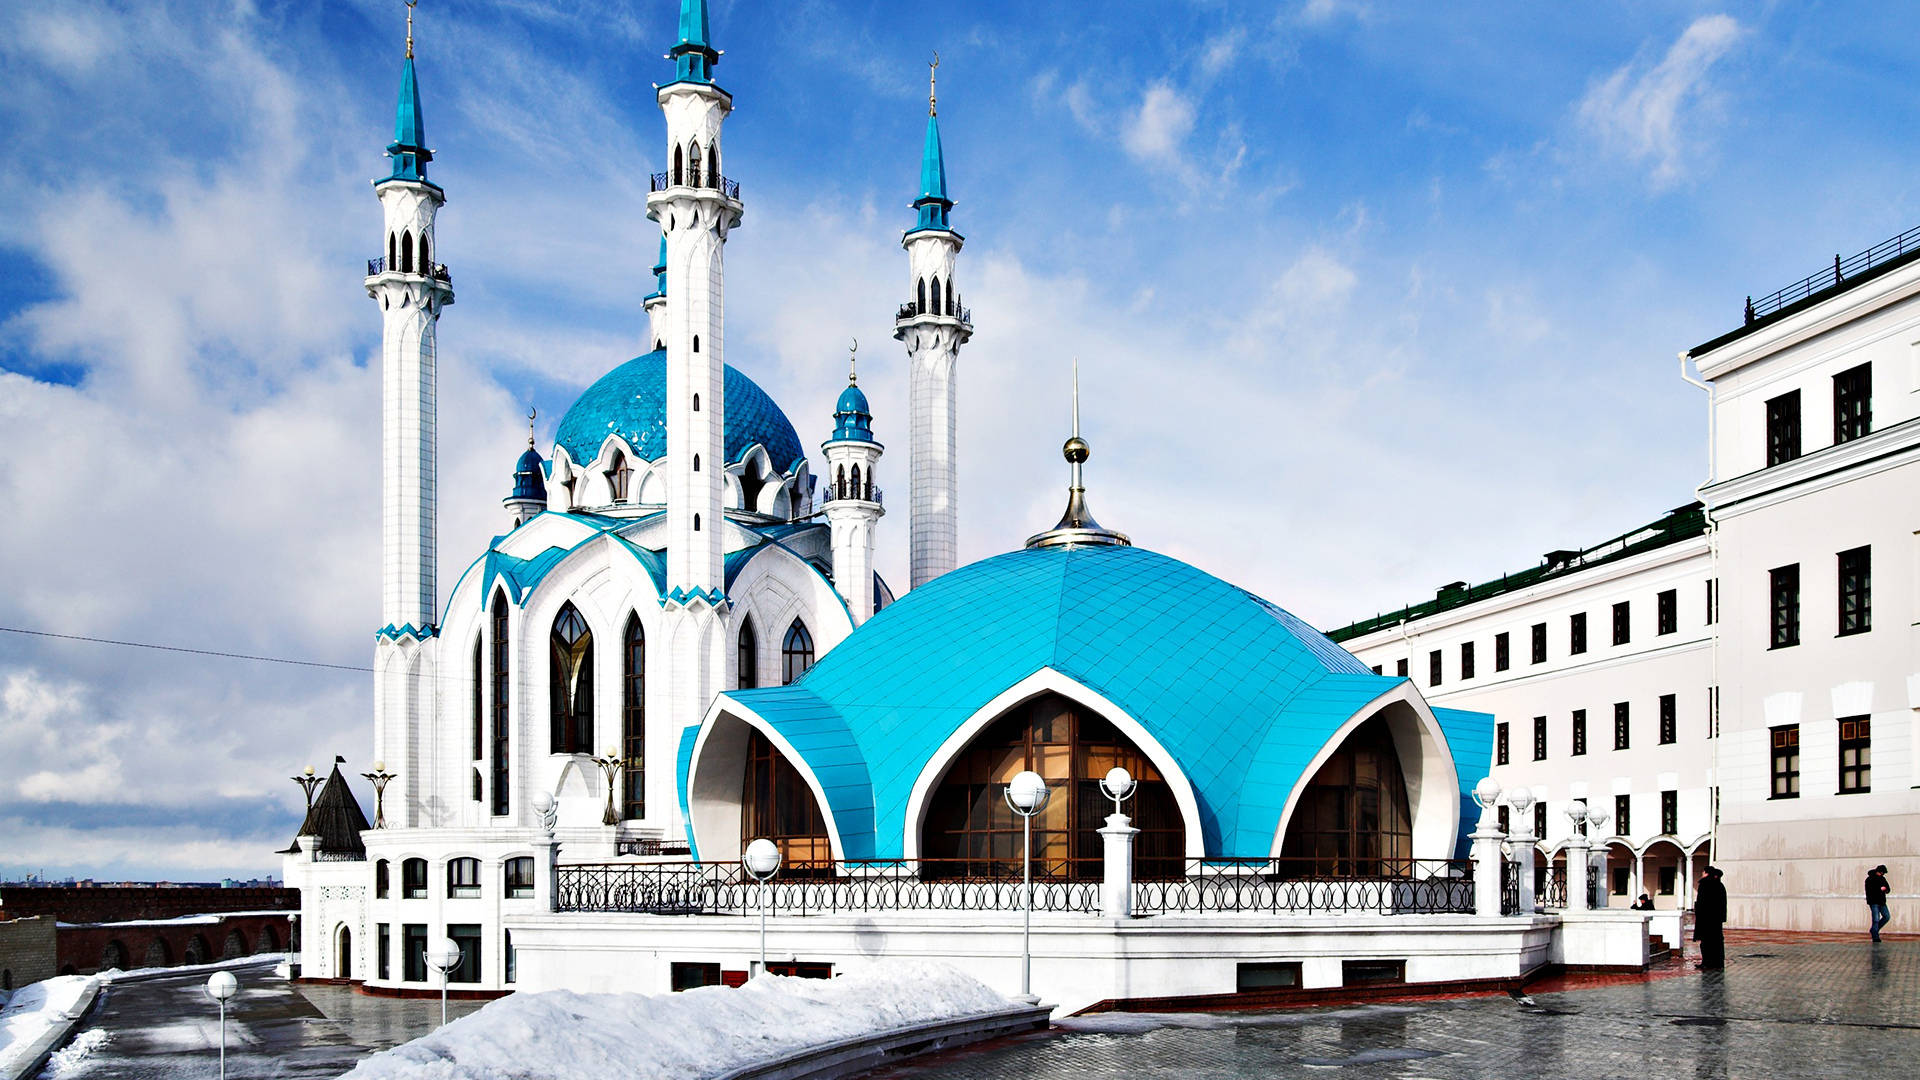 Caption: Majestic View of Kul Sharif Mosque in Kazan Wallpaper